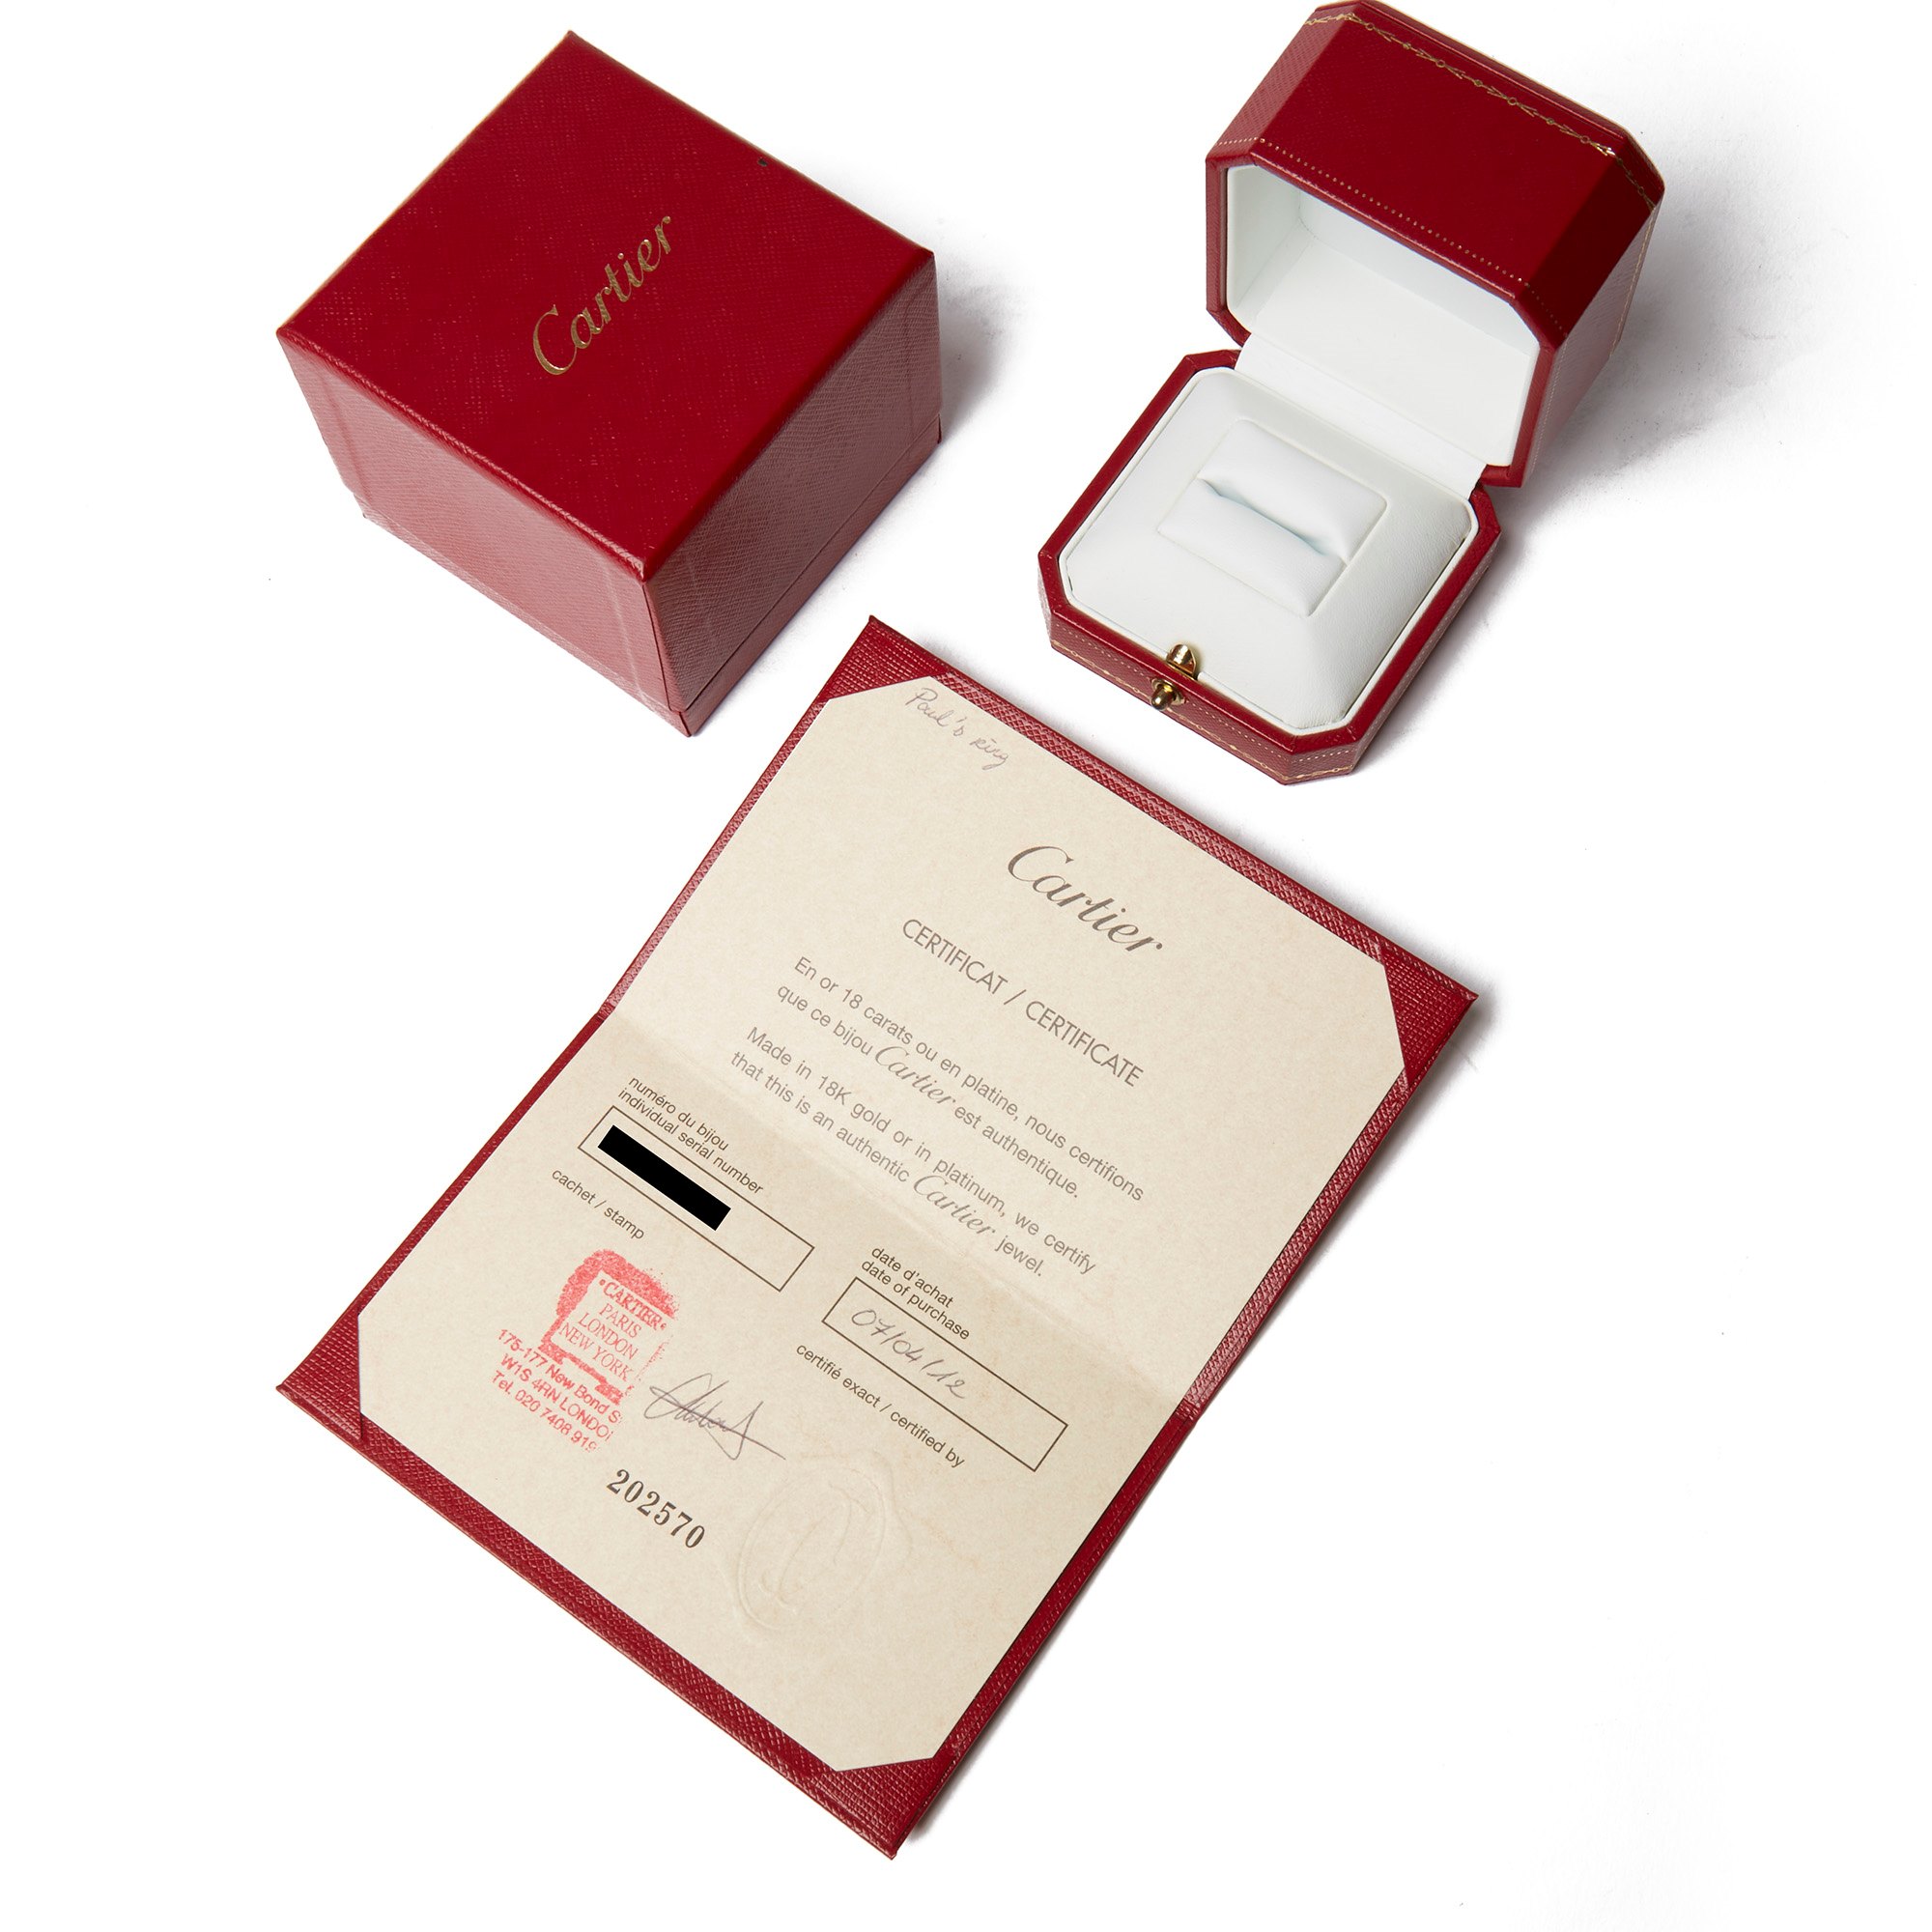 Cartier Platinum 4.03mm Court Wedding Ring